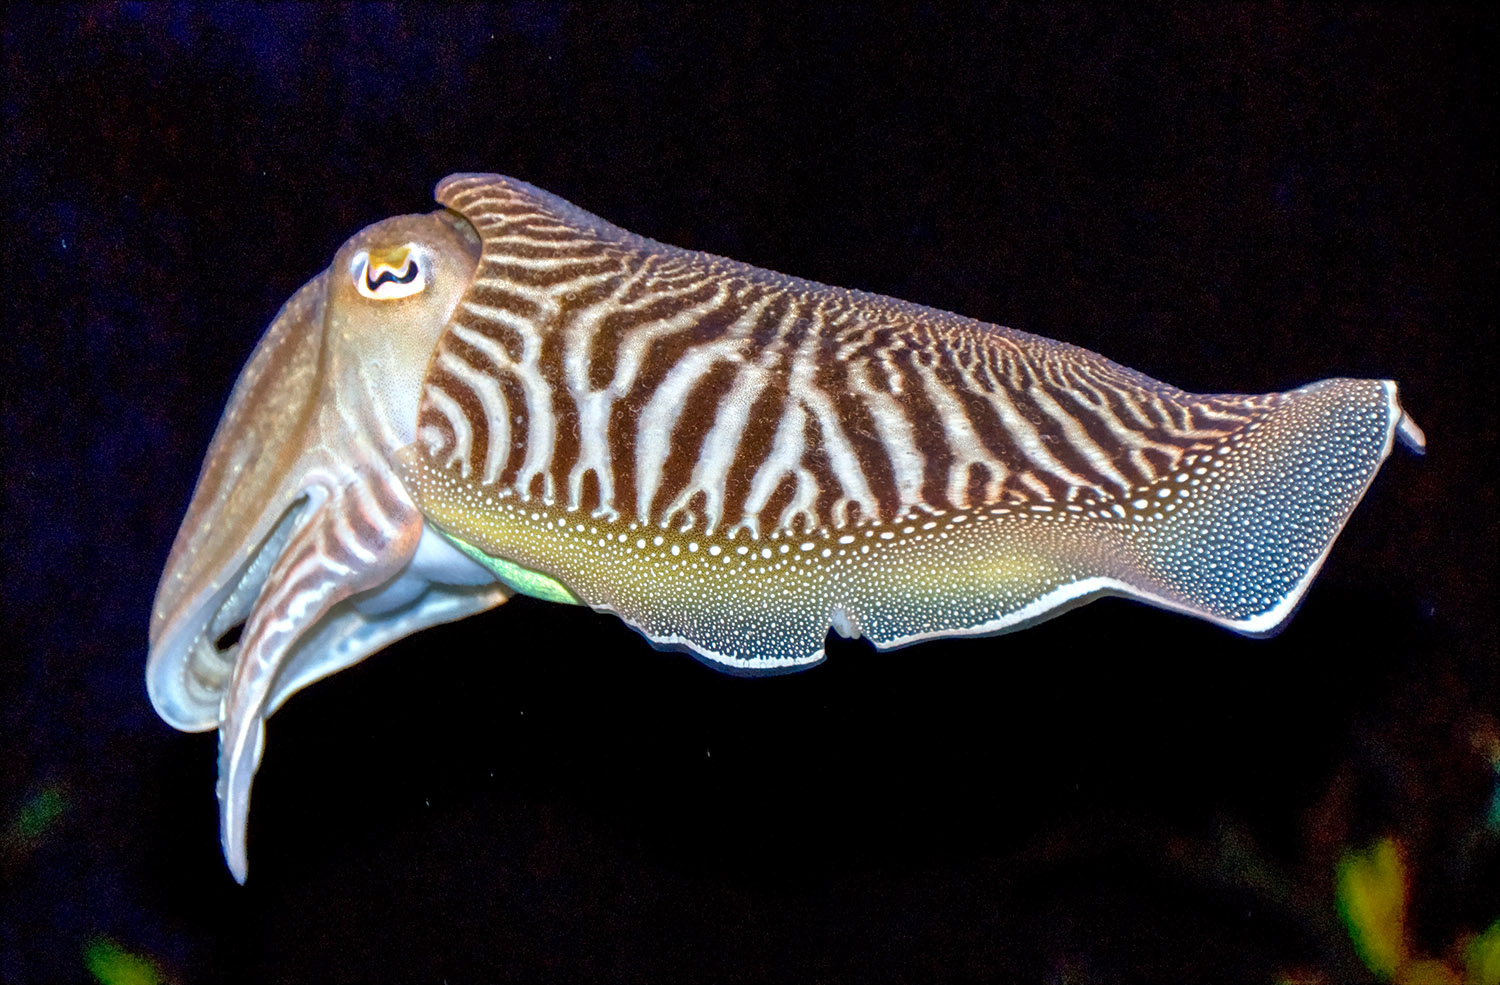 cuttlefish-side-view-560.jpg